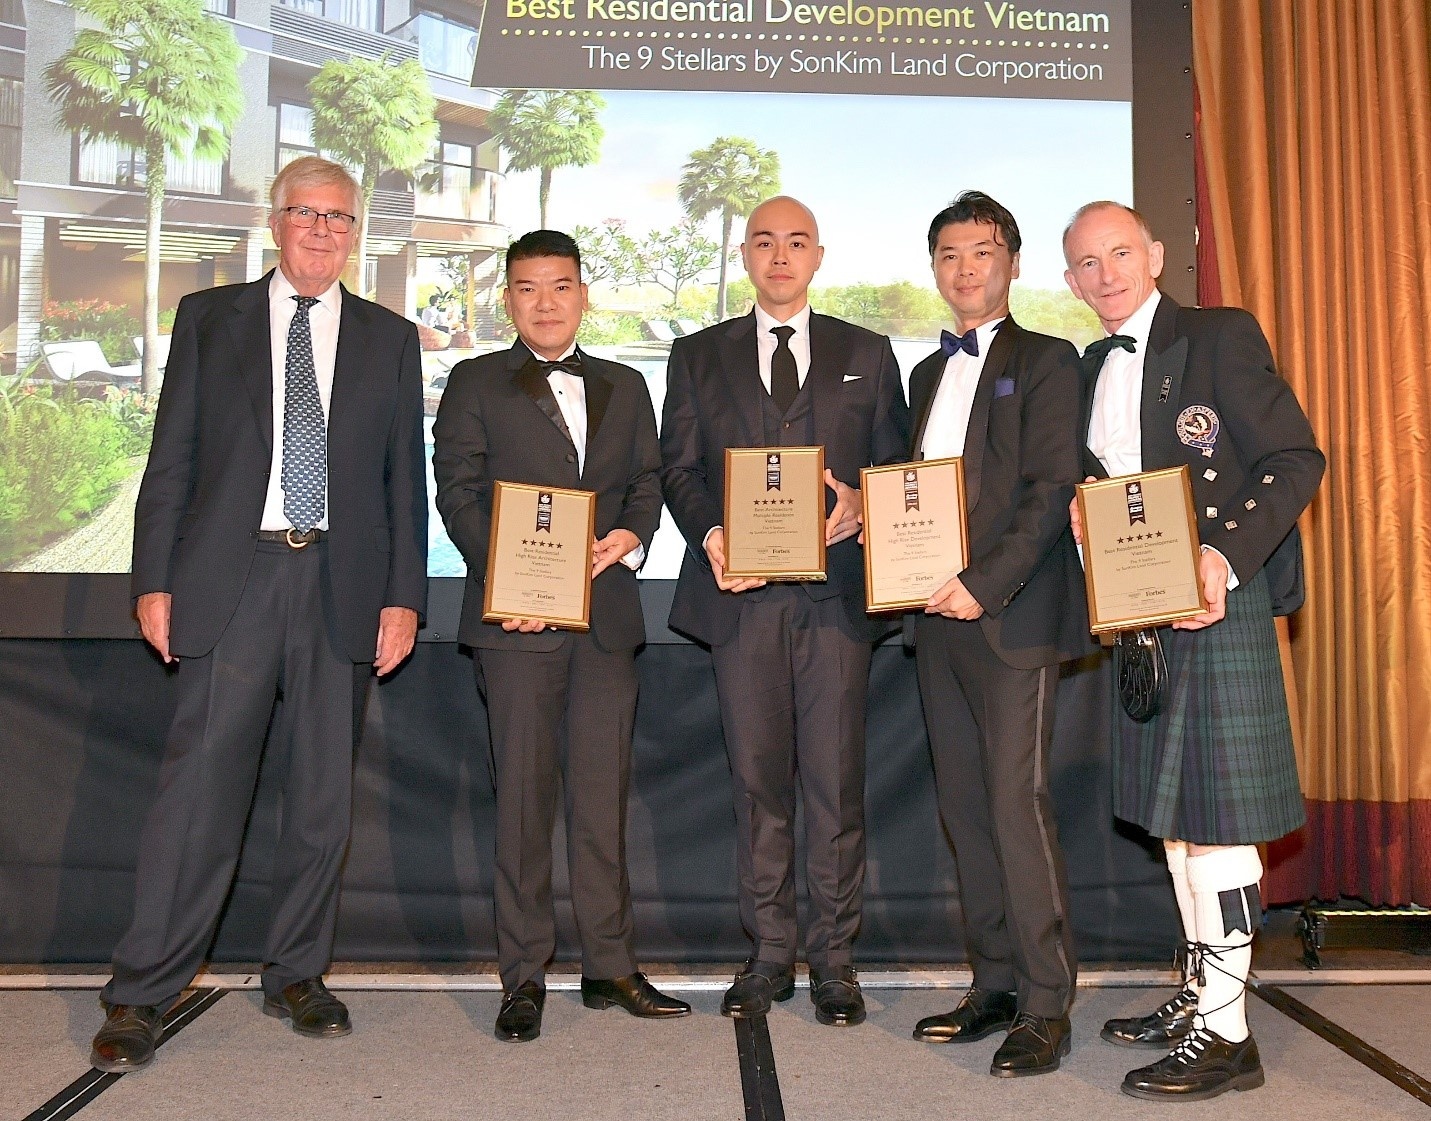 The 9 Stellars developed by SonKim Land scored five prestigious awards